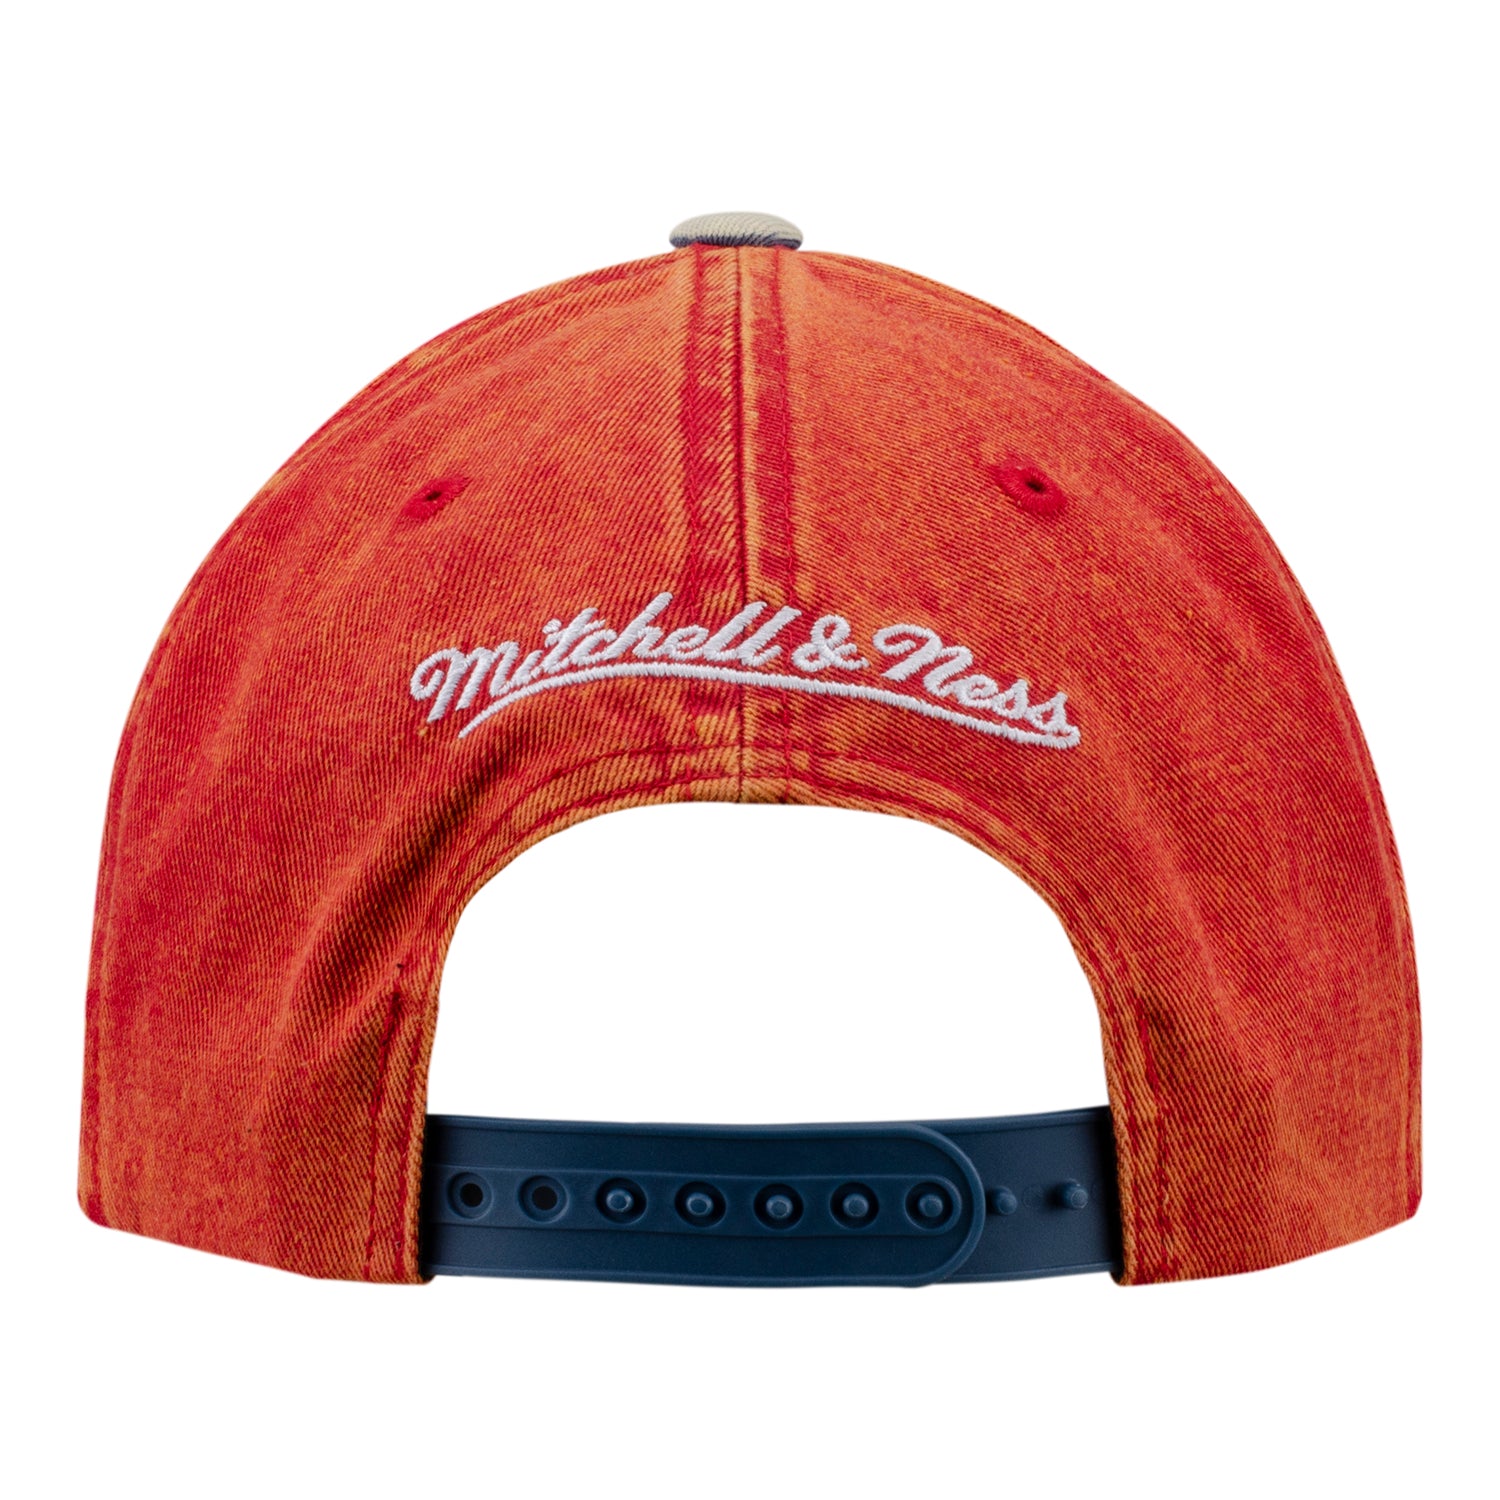 Mitchell & Ness Men's Hat - Multi